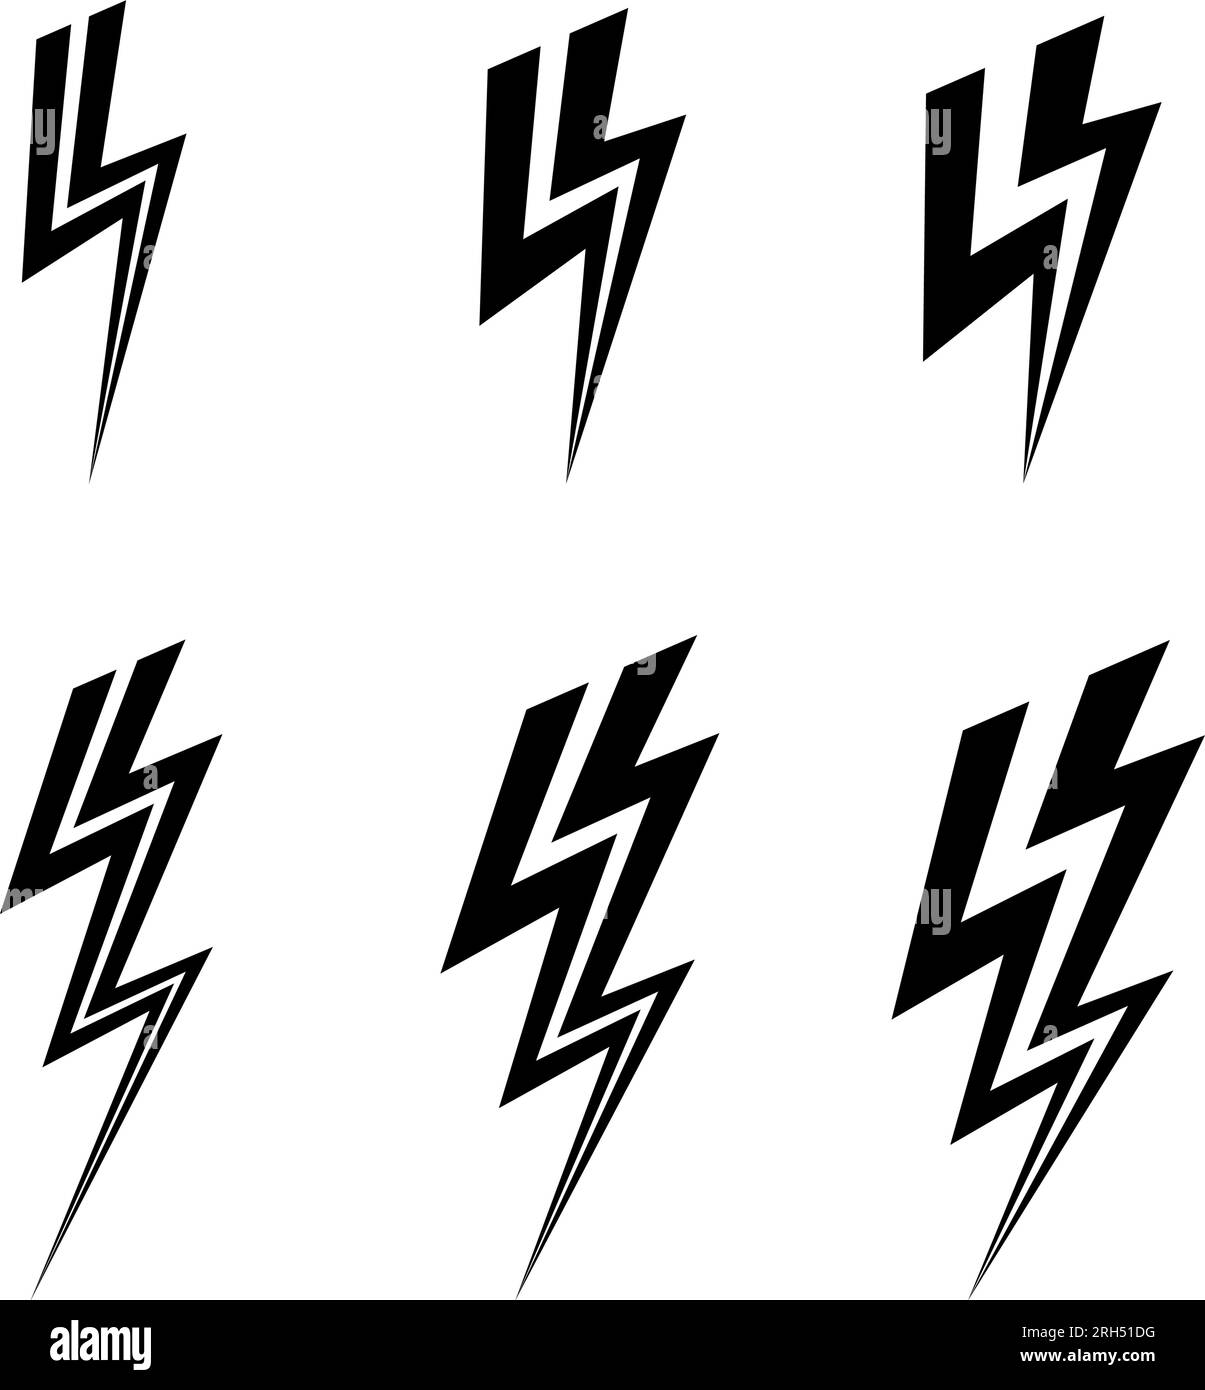 Black Lightning Bolt Icons. Simple Icon Storm or Thunder and Lightning strike. Flash Symbol, Thunderbolt. Simple Cartoon Lightning Strike Sign Stock Vector